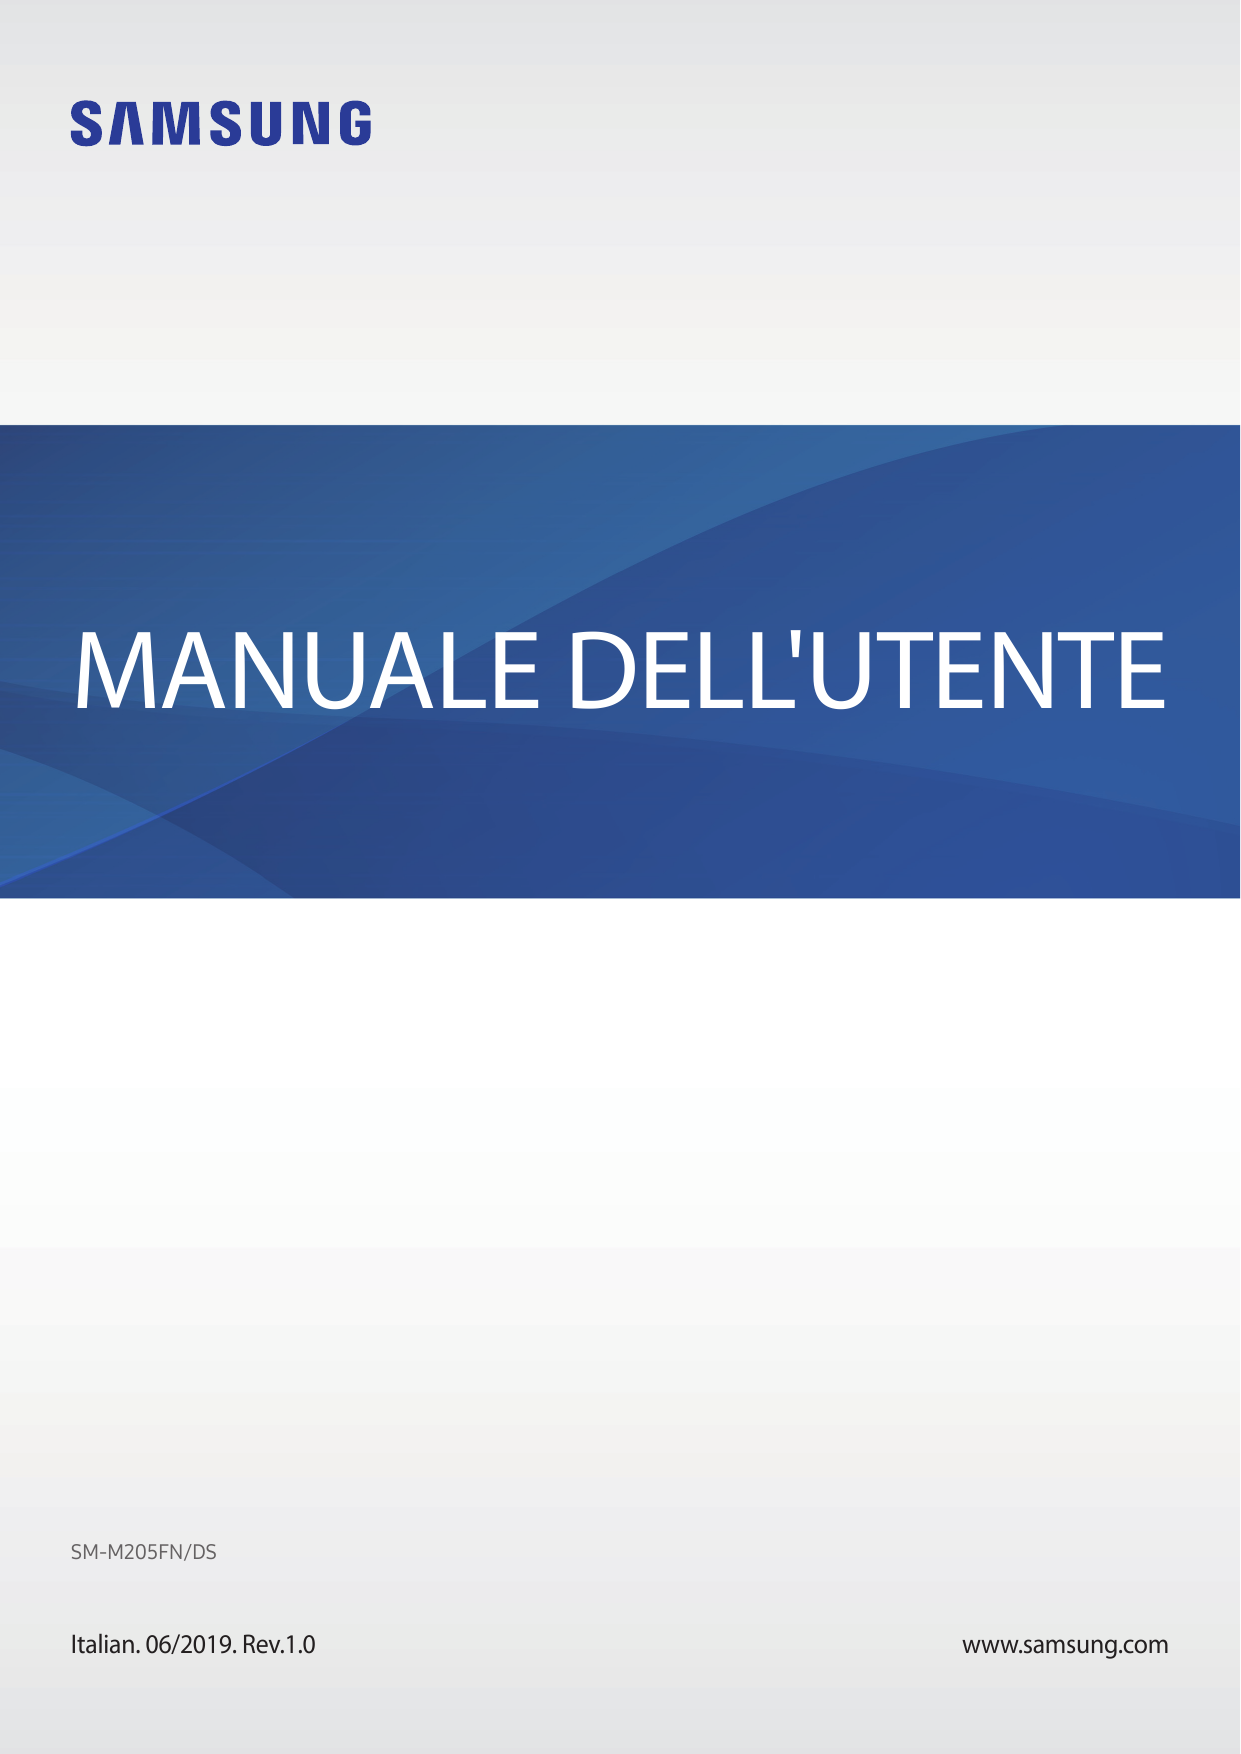 MANUALE DELL'UTENTESM-M205FN/DSItalian. 06/2019. Rev.1.0www.samsung.com